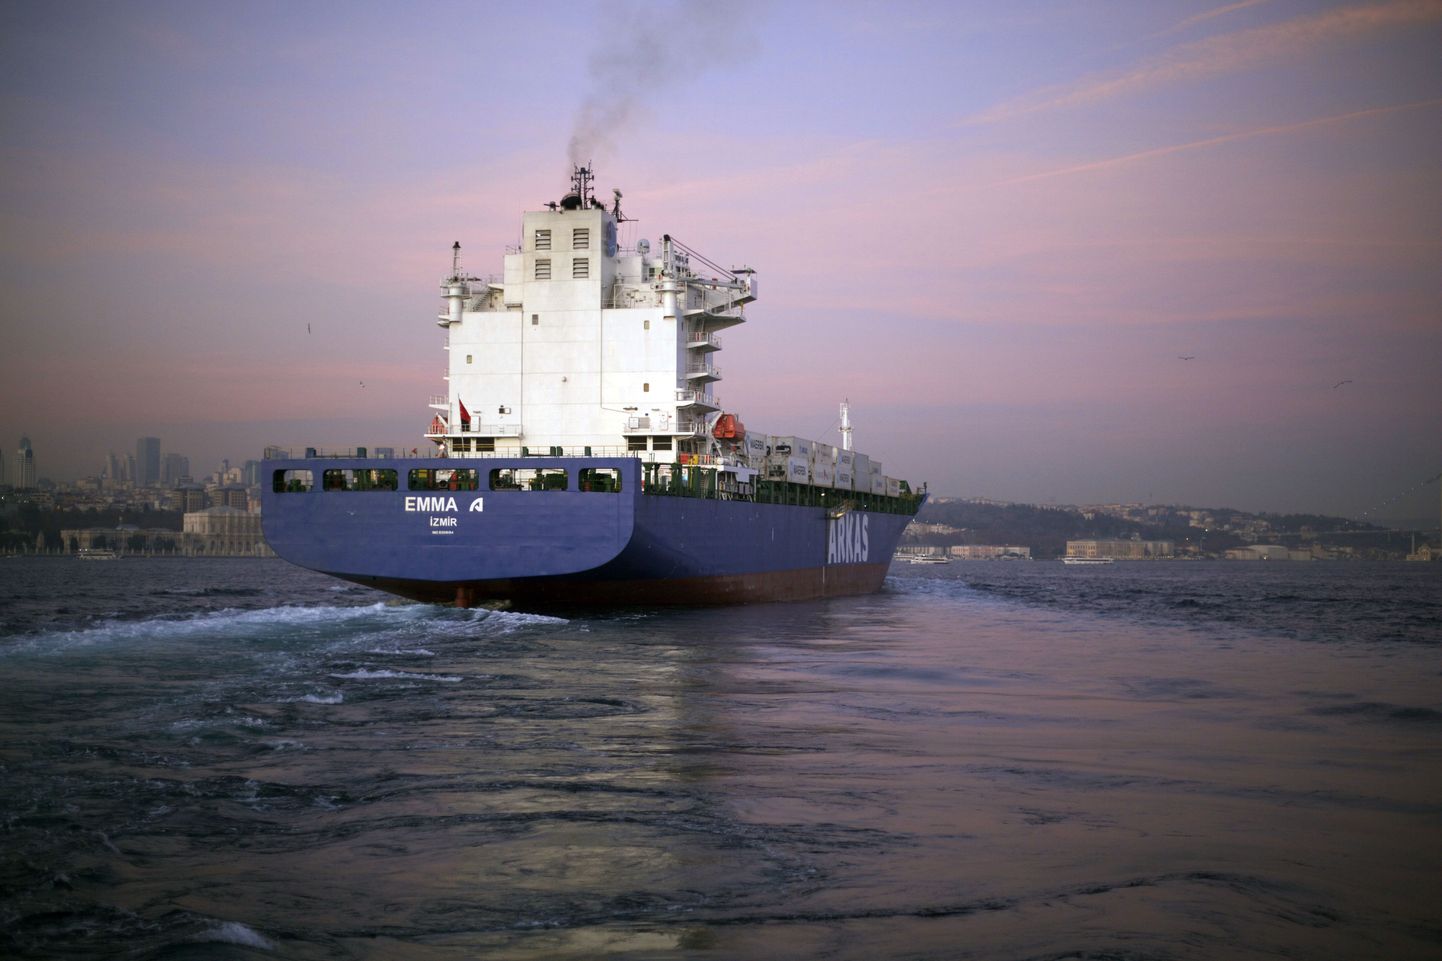 Naftatanker Bosporuse lahes. Pilt on illustratiivne.